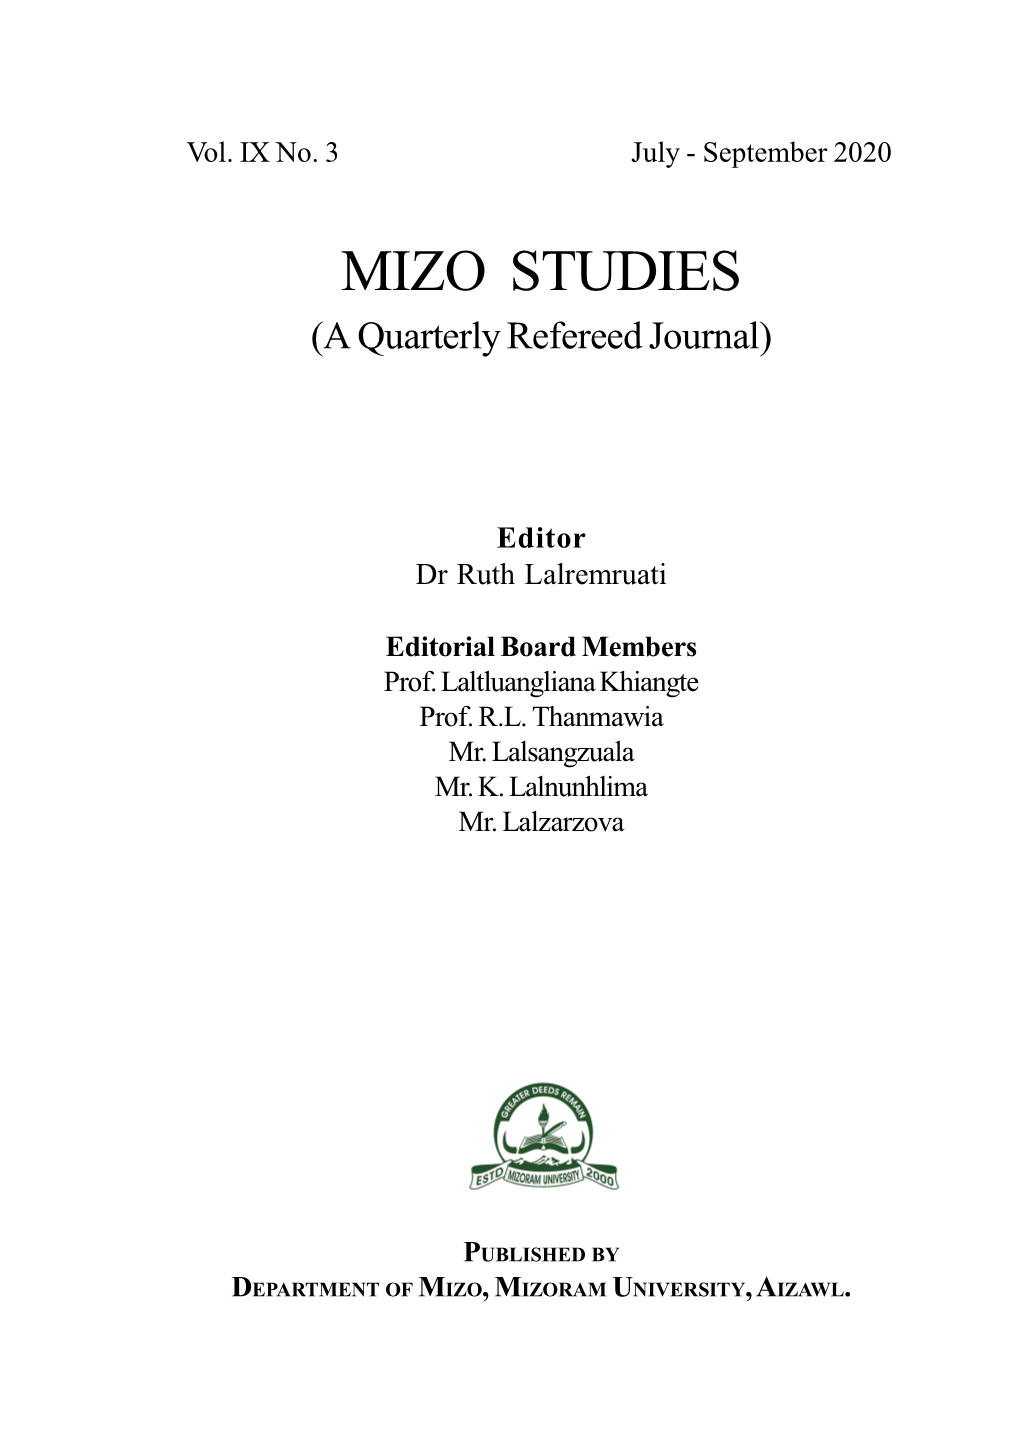 Mizo Studies July - September 2020 Vol